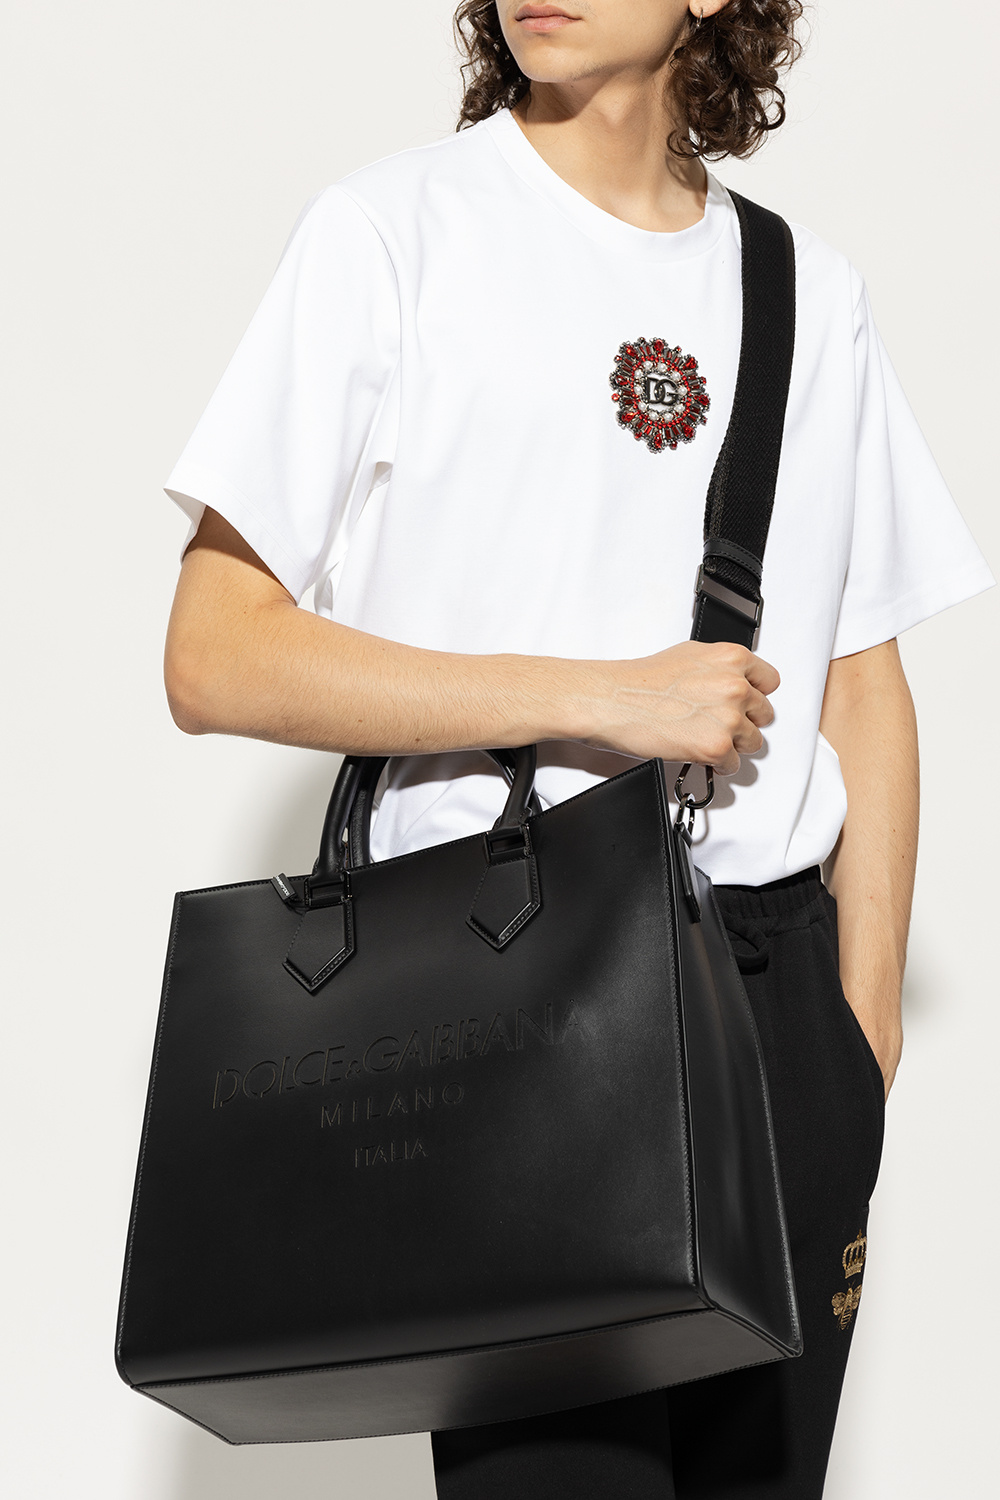 DOLCE & GABBANA long-sleeve denim shirt ‘Edge’ shopper bag